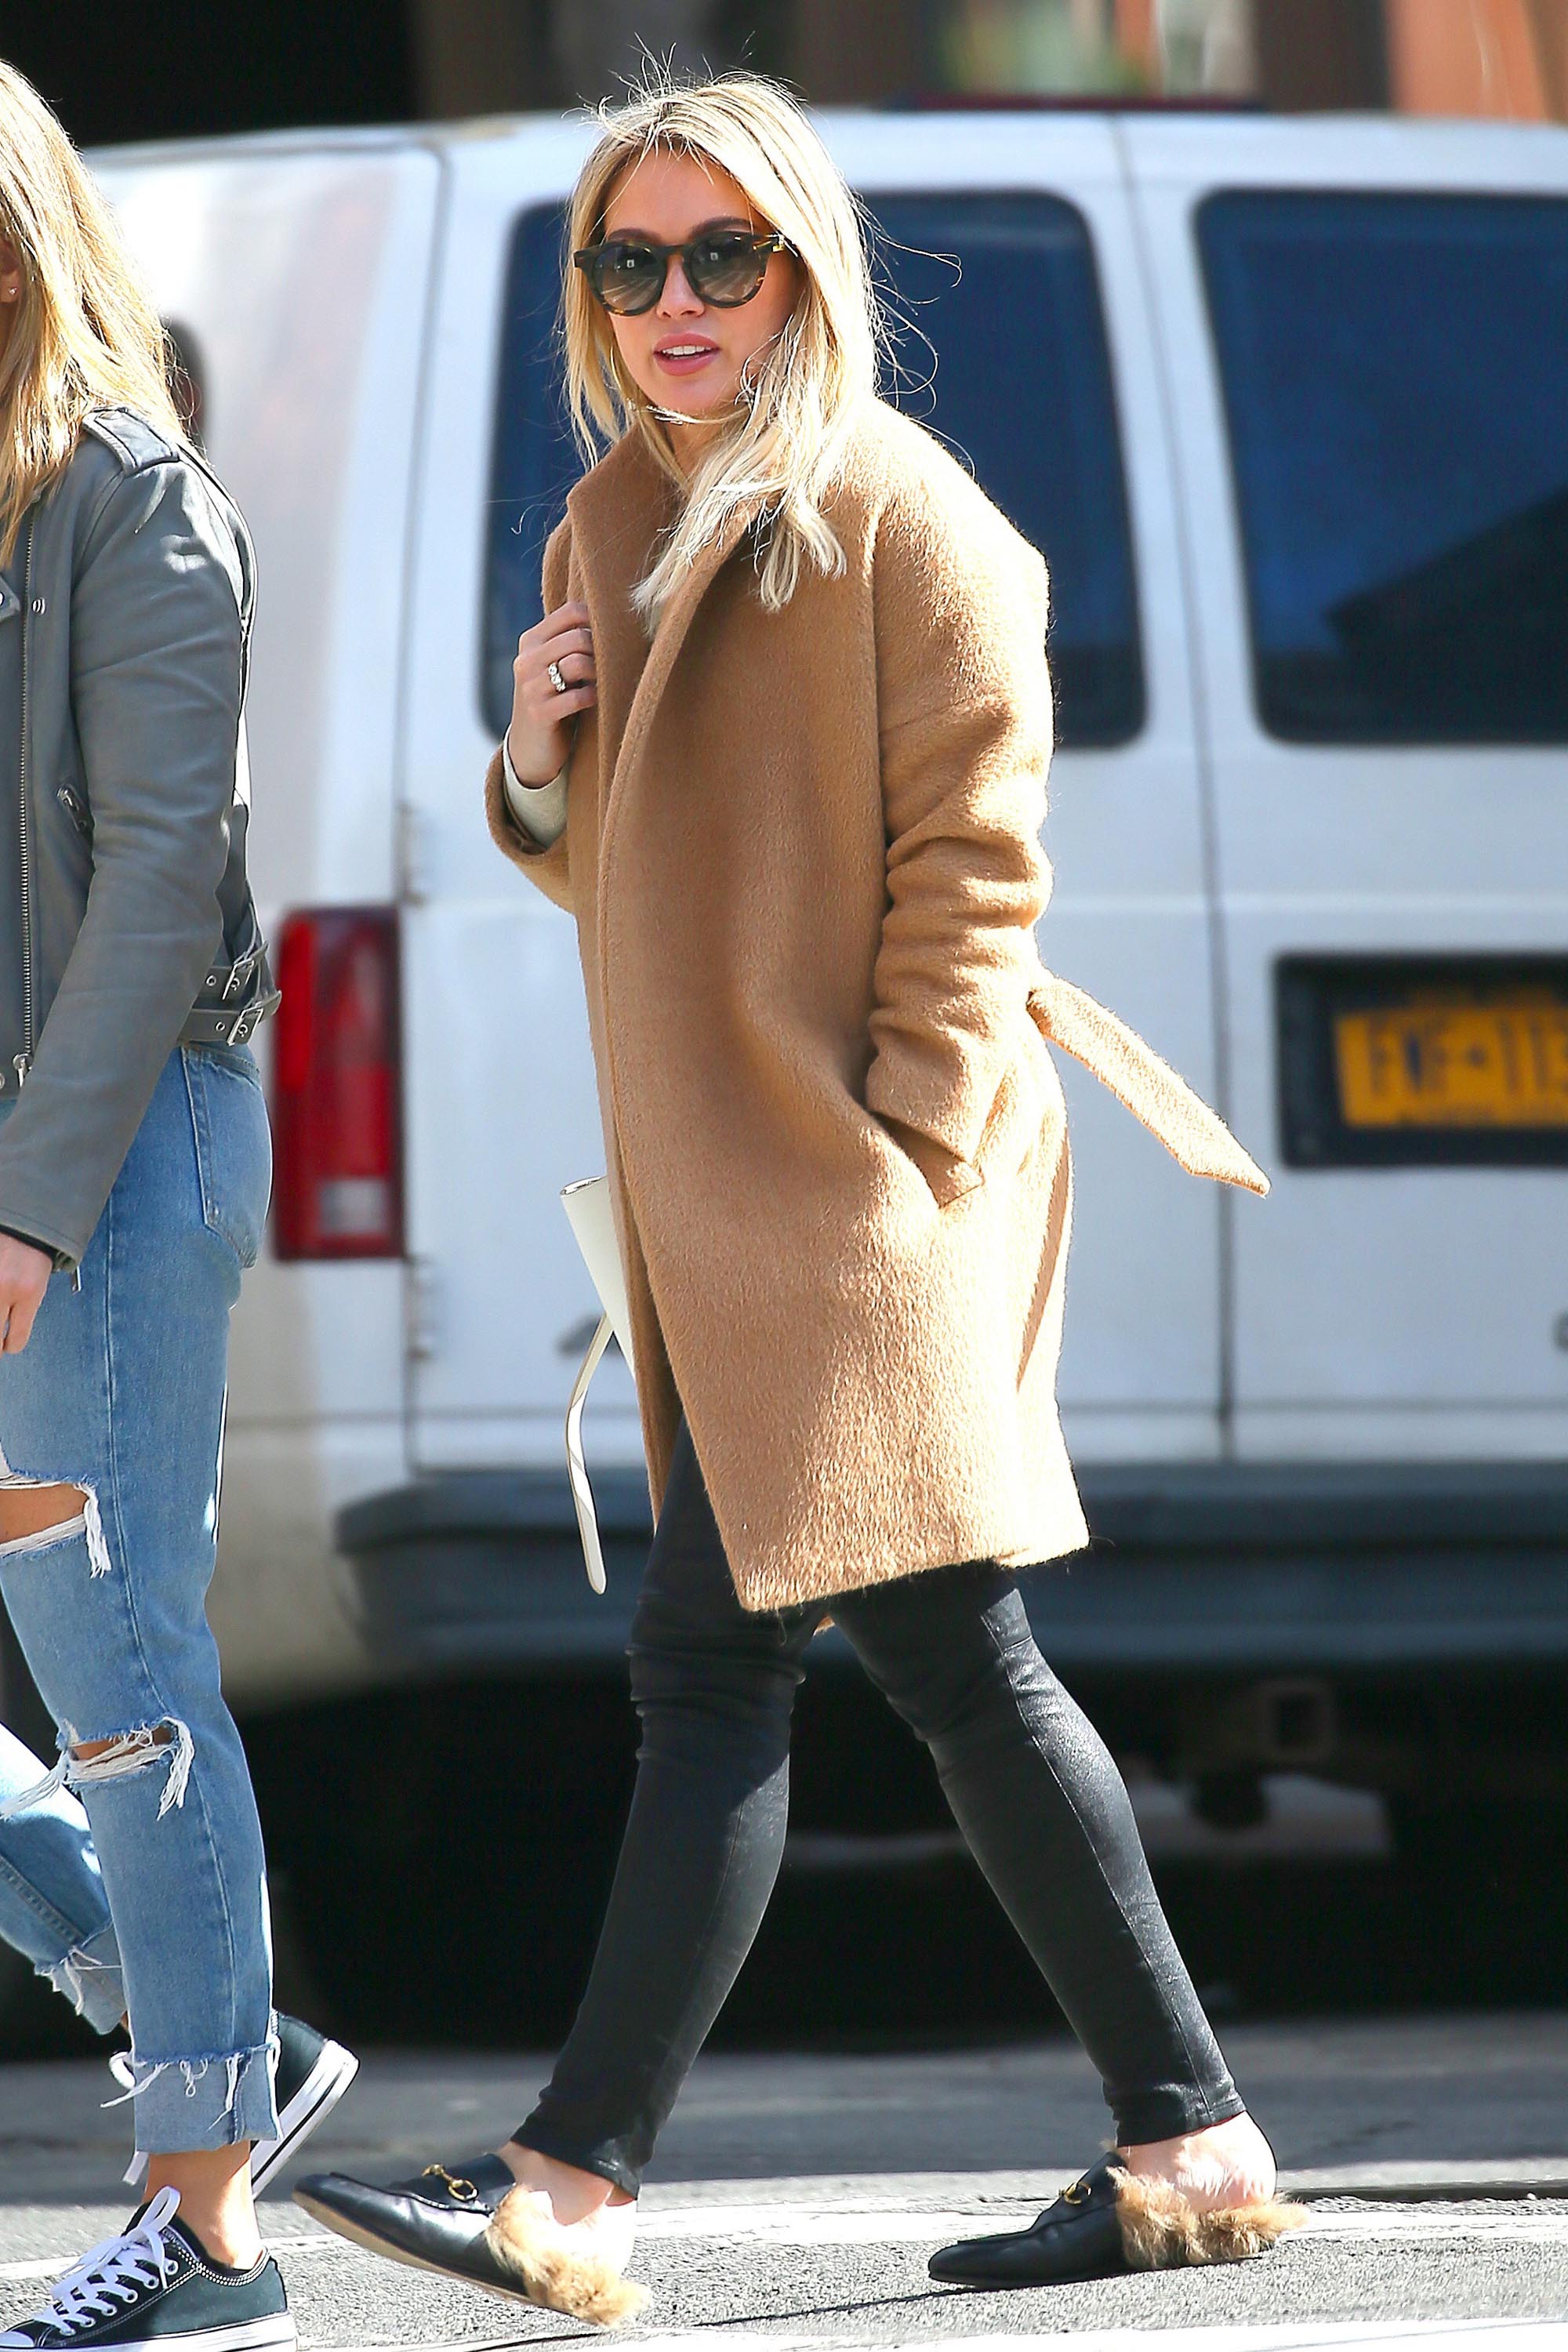 Hilary Duff shopping in NYC